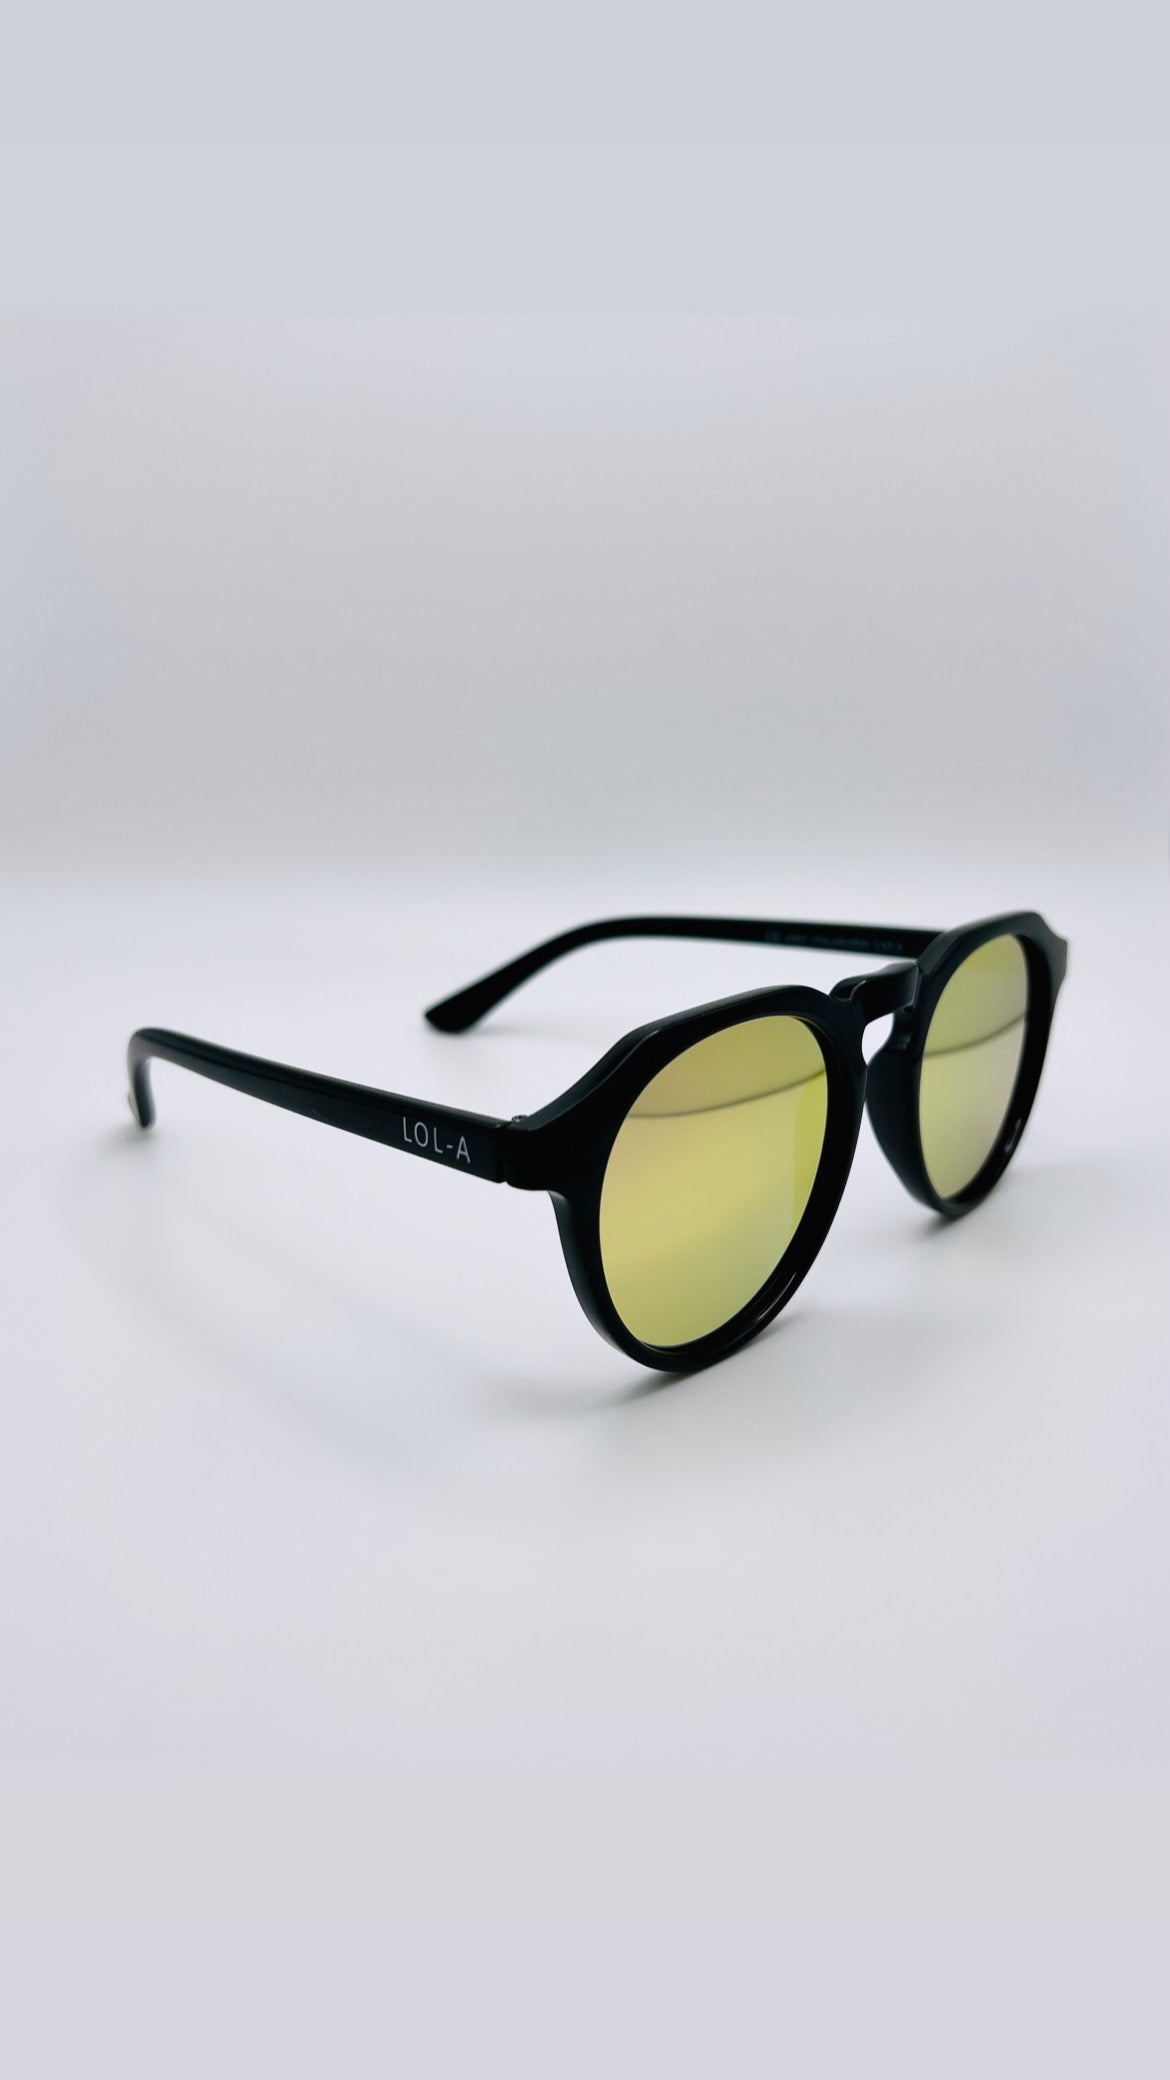 "ICU 2" Sunglasses